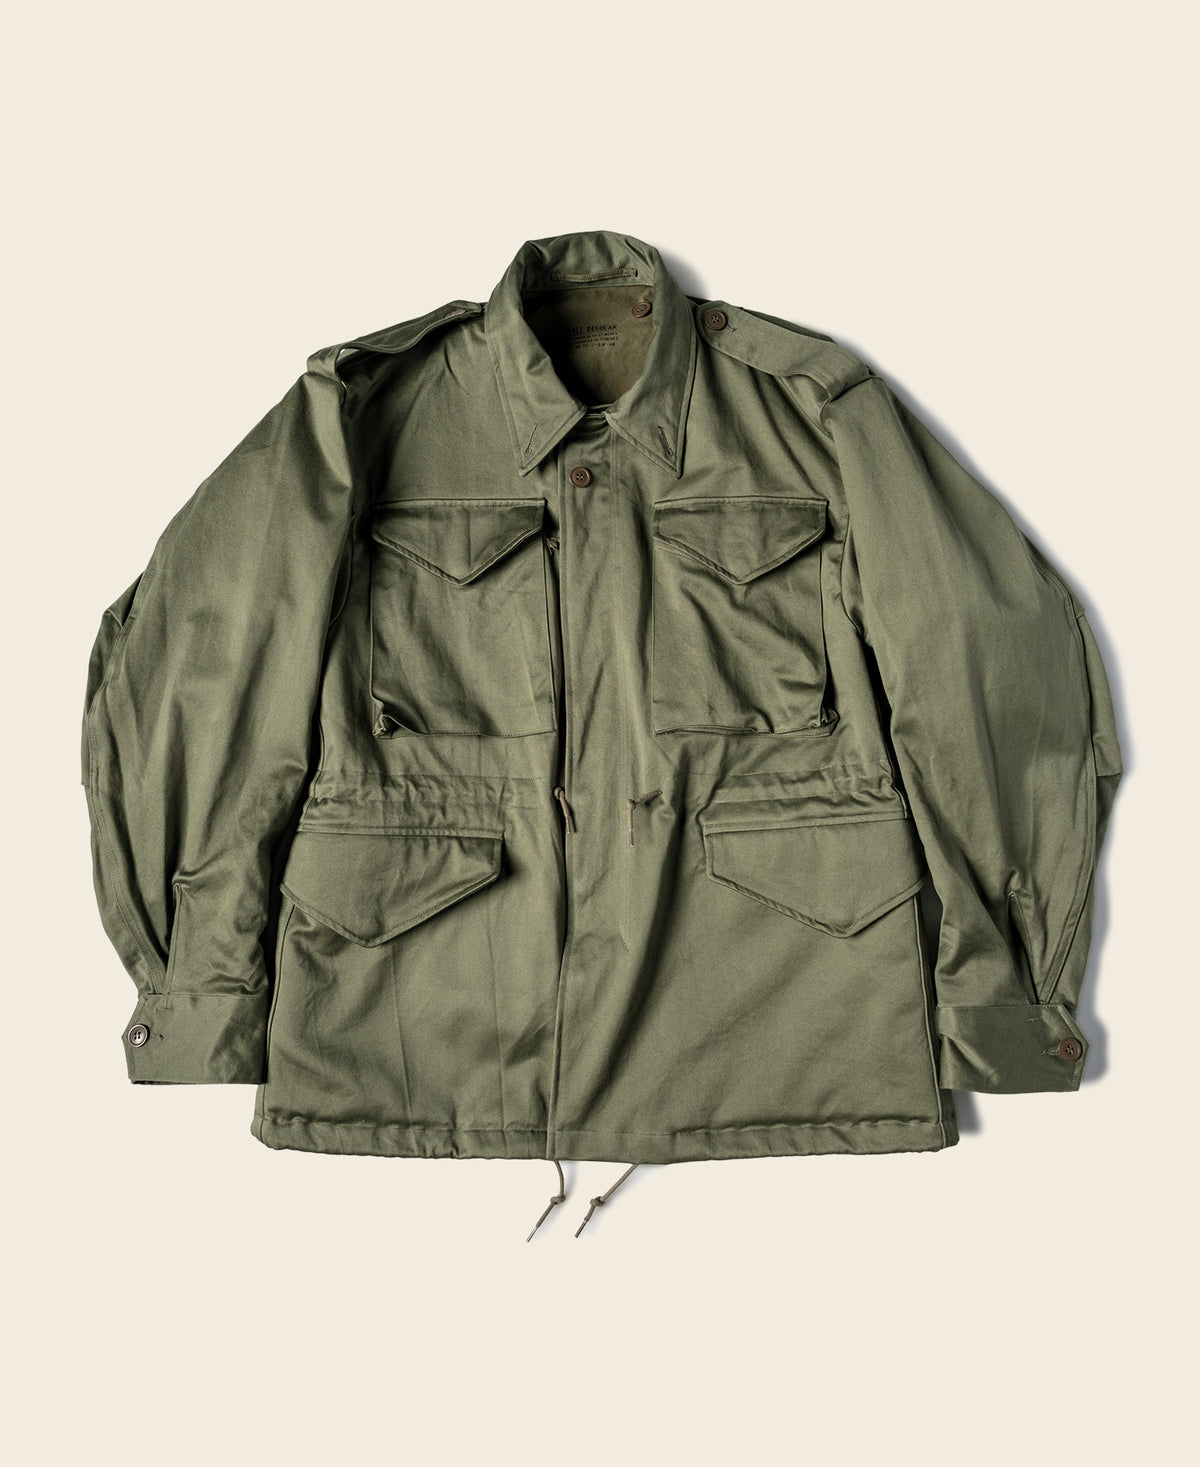 US Army M-1951 Field Jacket